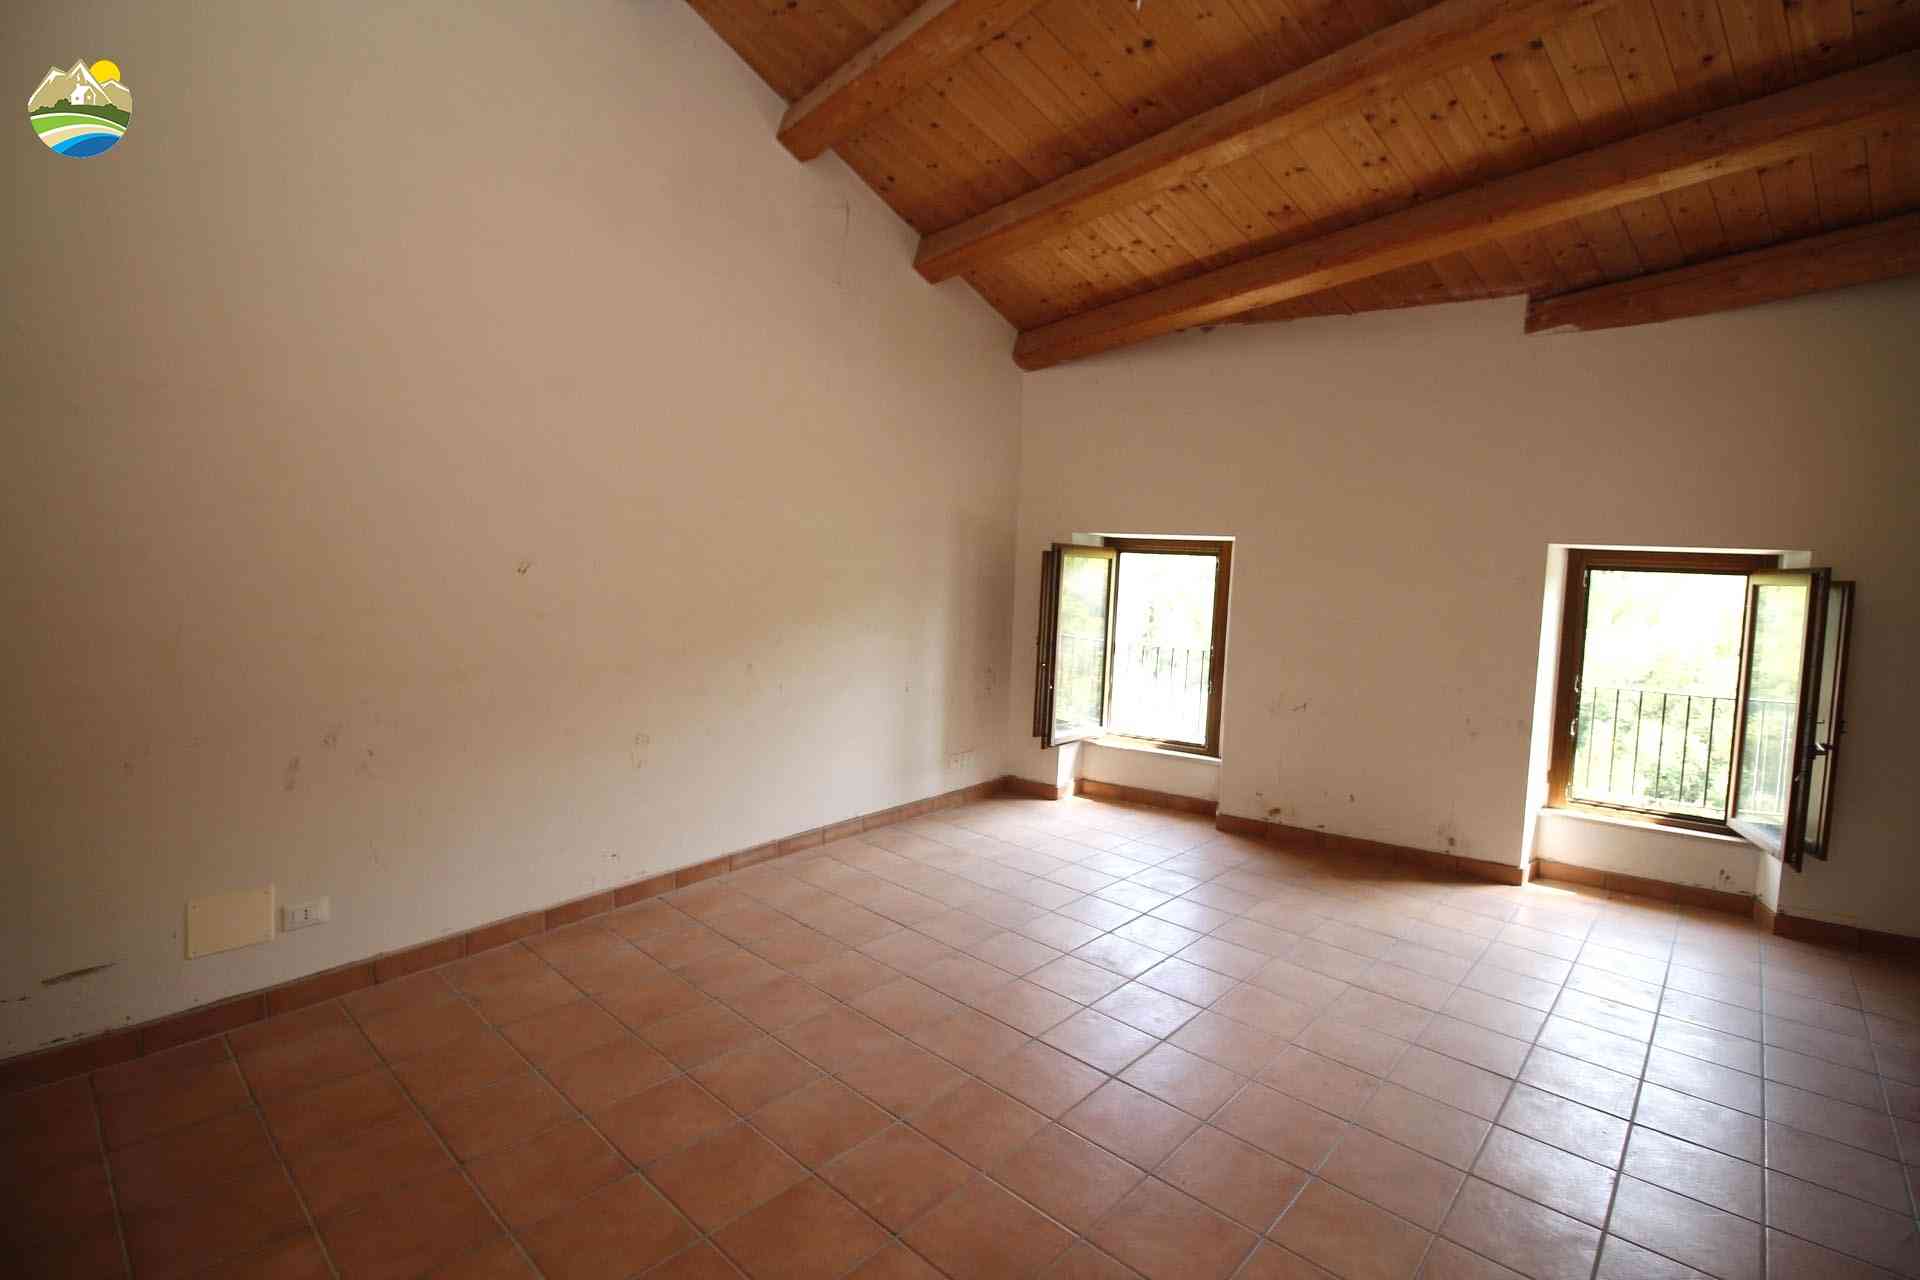 Country Houses Country Houses for sale Bisenti (TE), Appartamento De Carolis - Bisenti - EUR 83.297 590